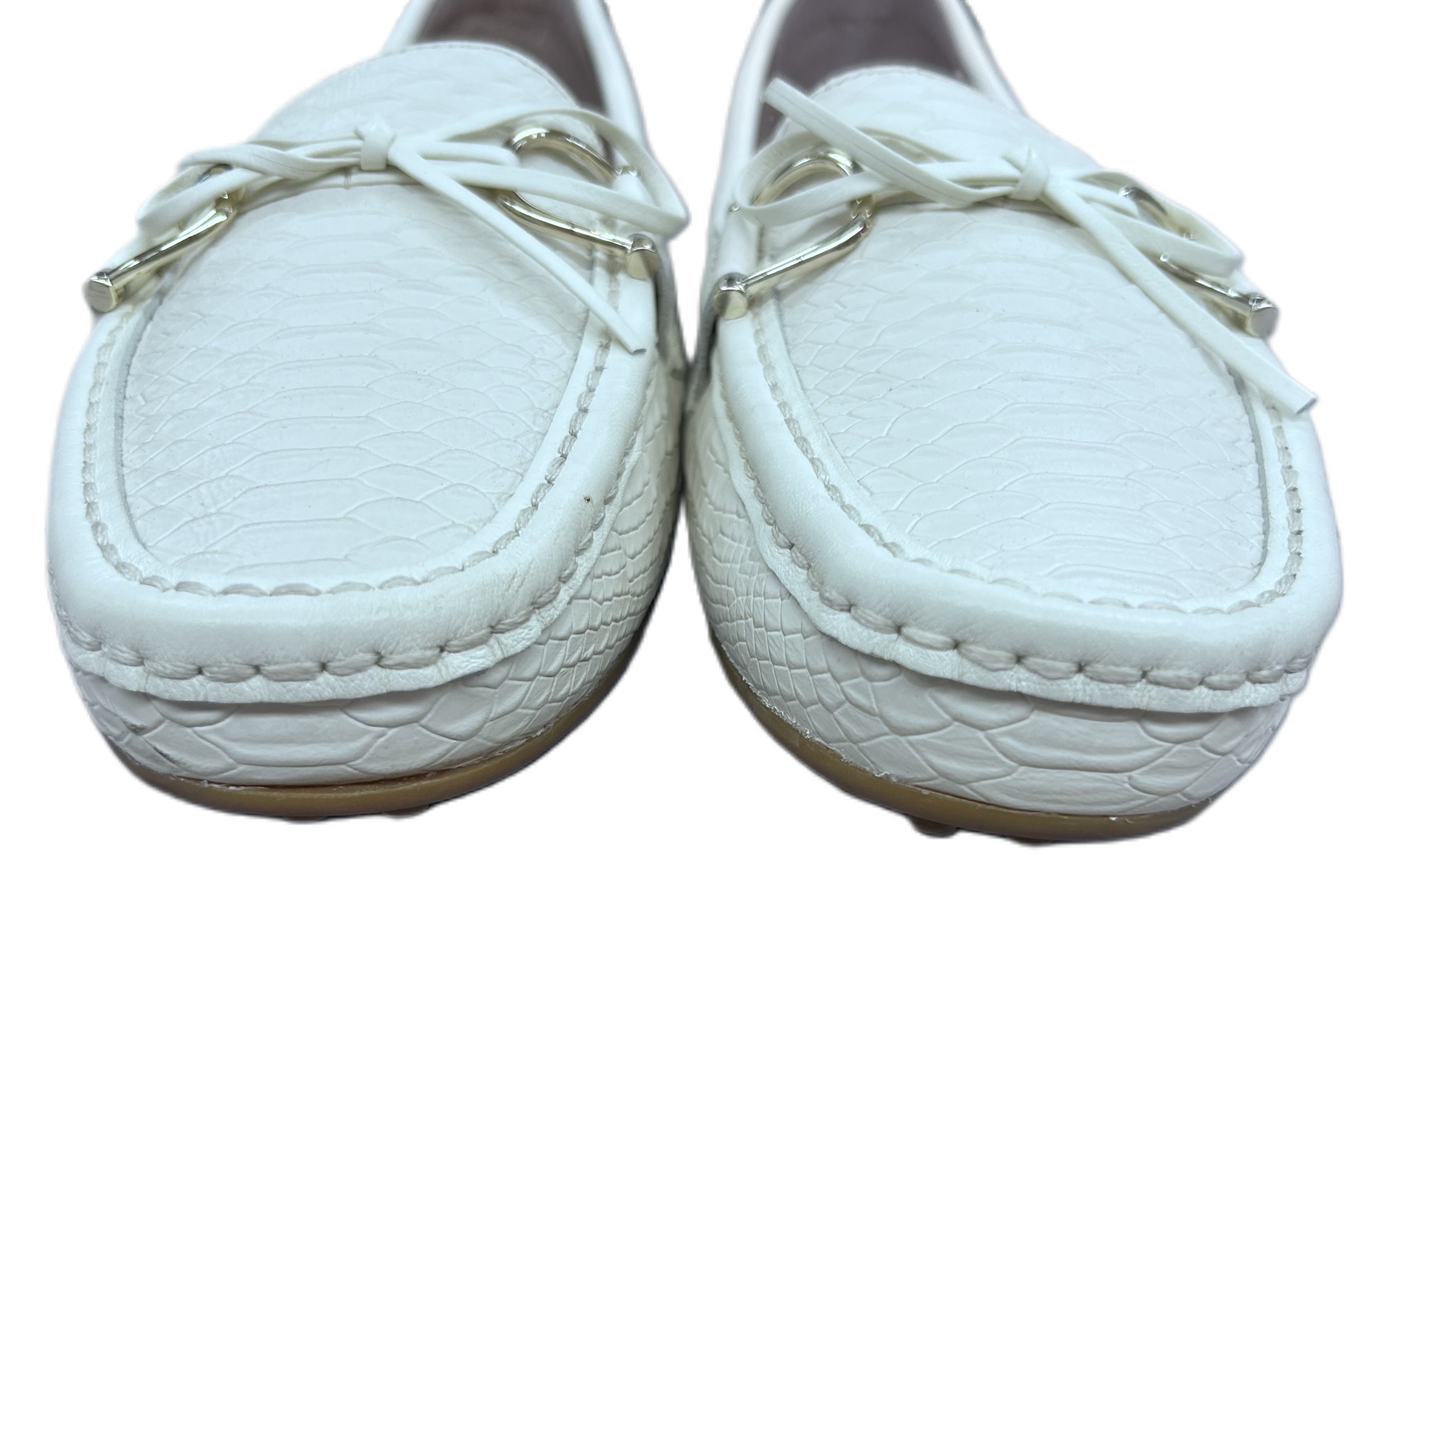 Shoes Flats By Lauren By Ralph Lauren  Size: 8